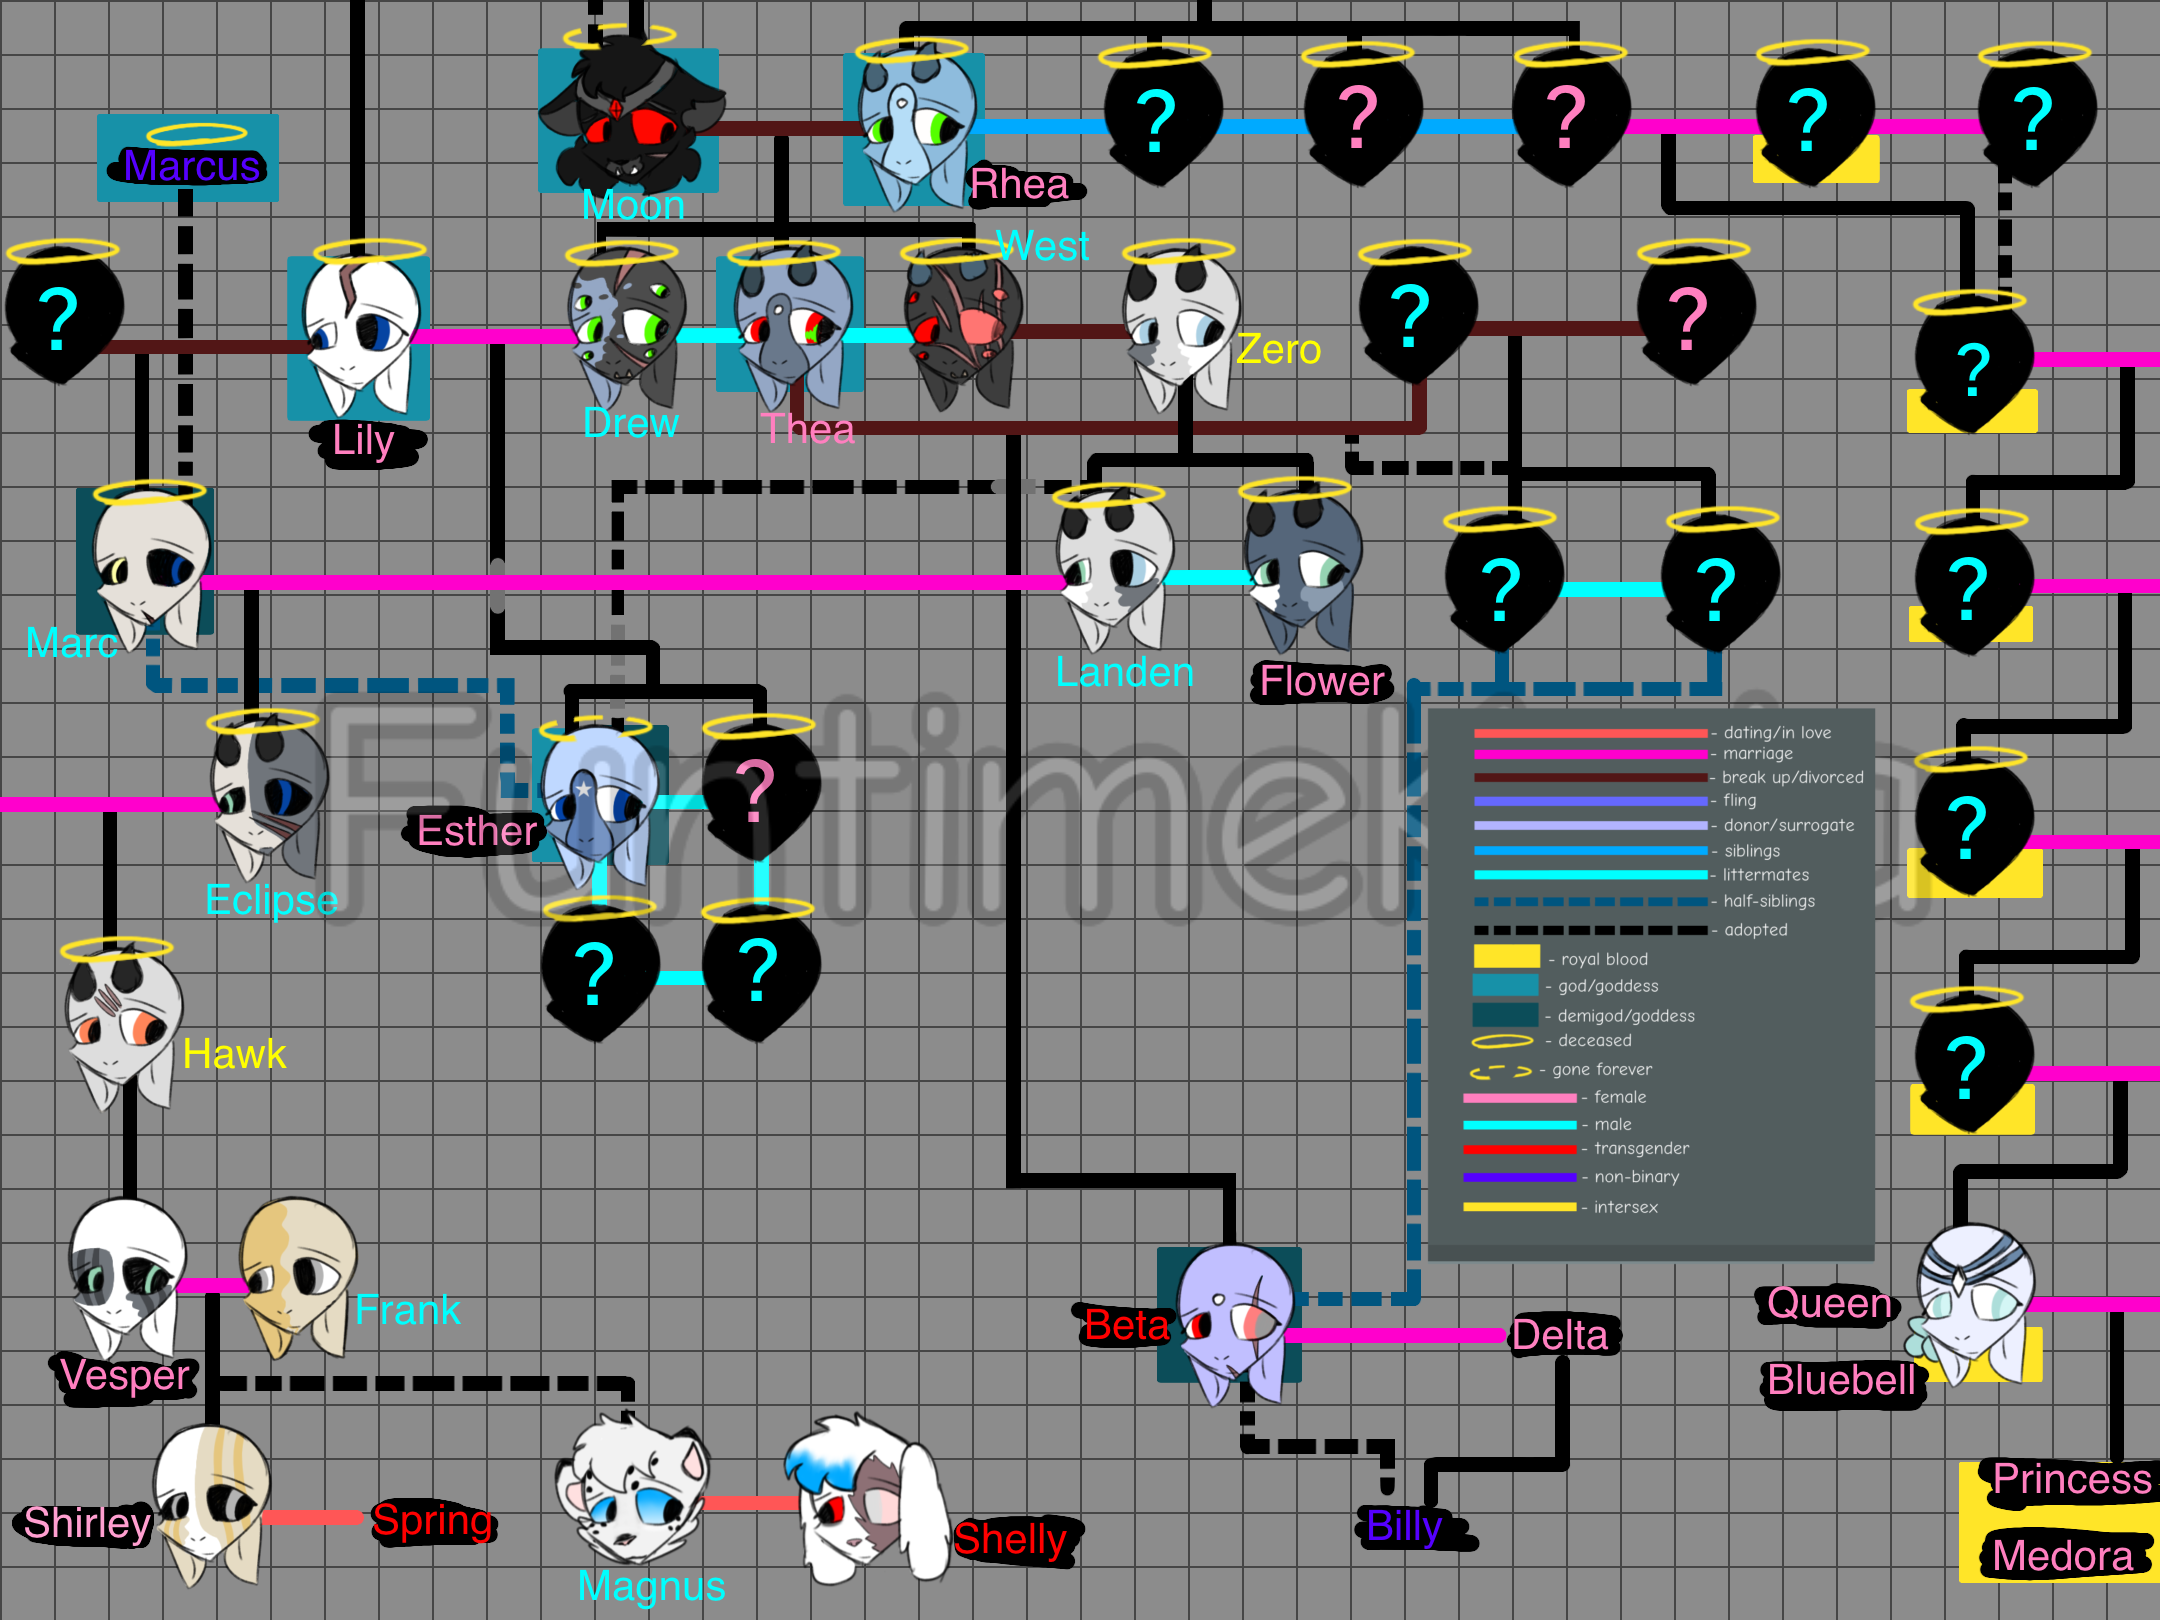 SCP-999 Family tree by DinoOJ07 on DeviantArt